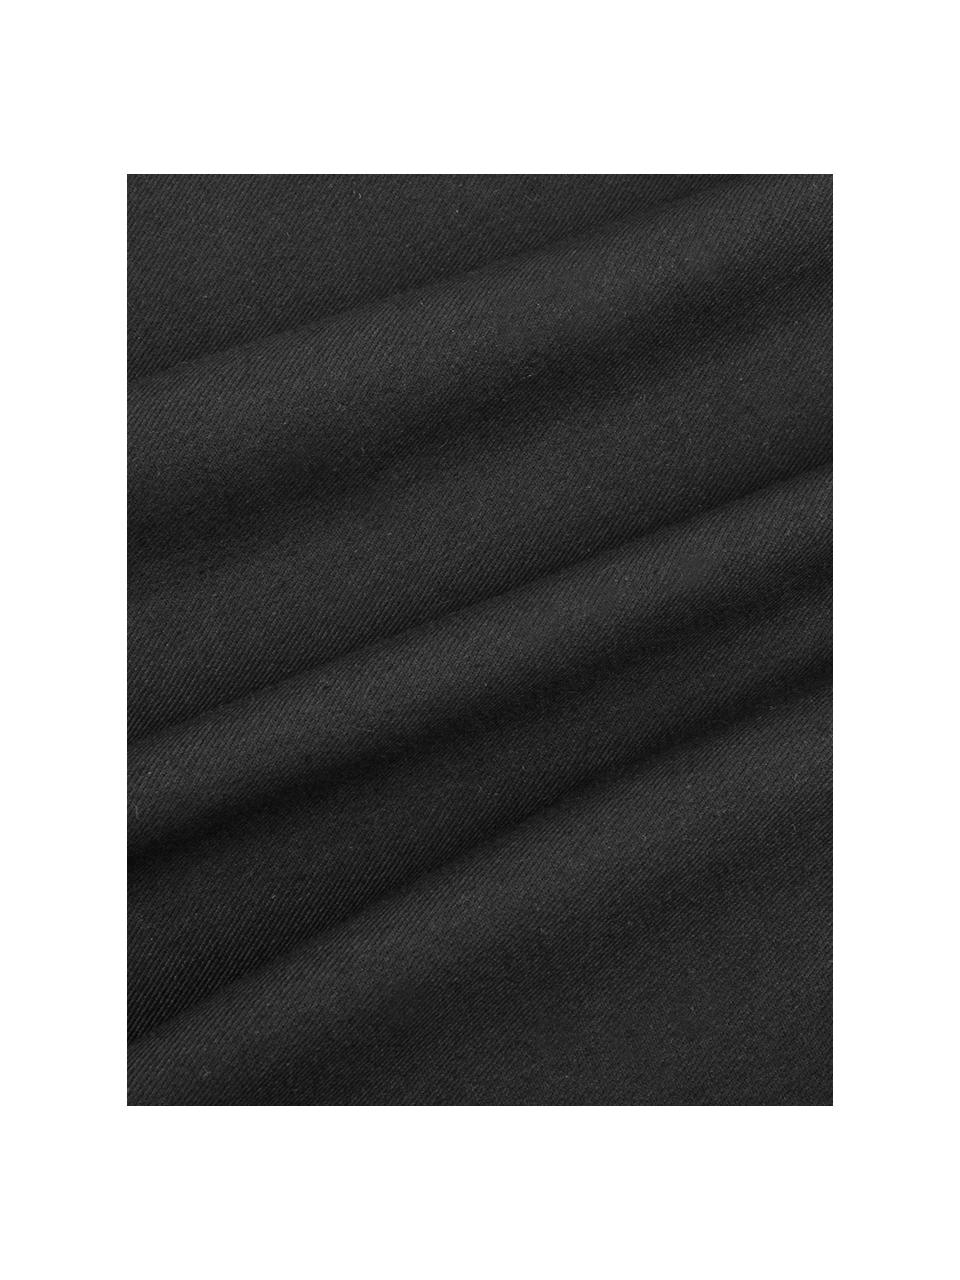 Kussenhoes Mads, 100% katoen, Zwart, 50 x 50 cm